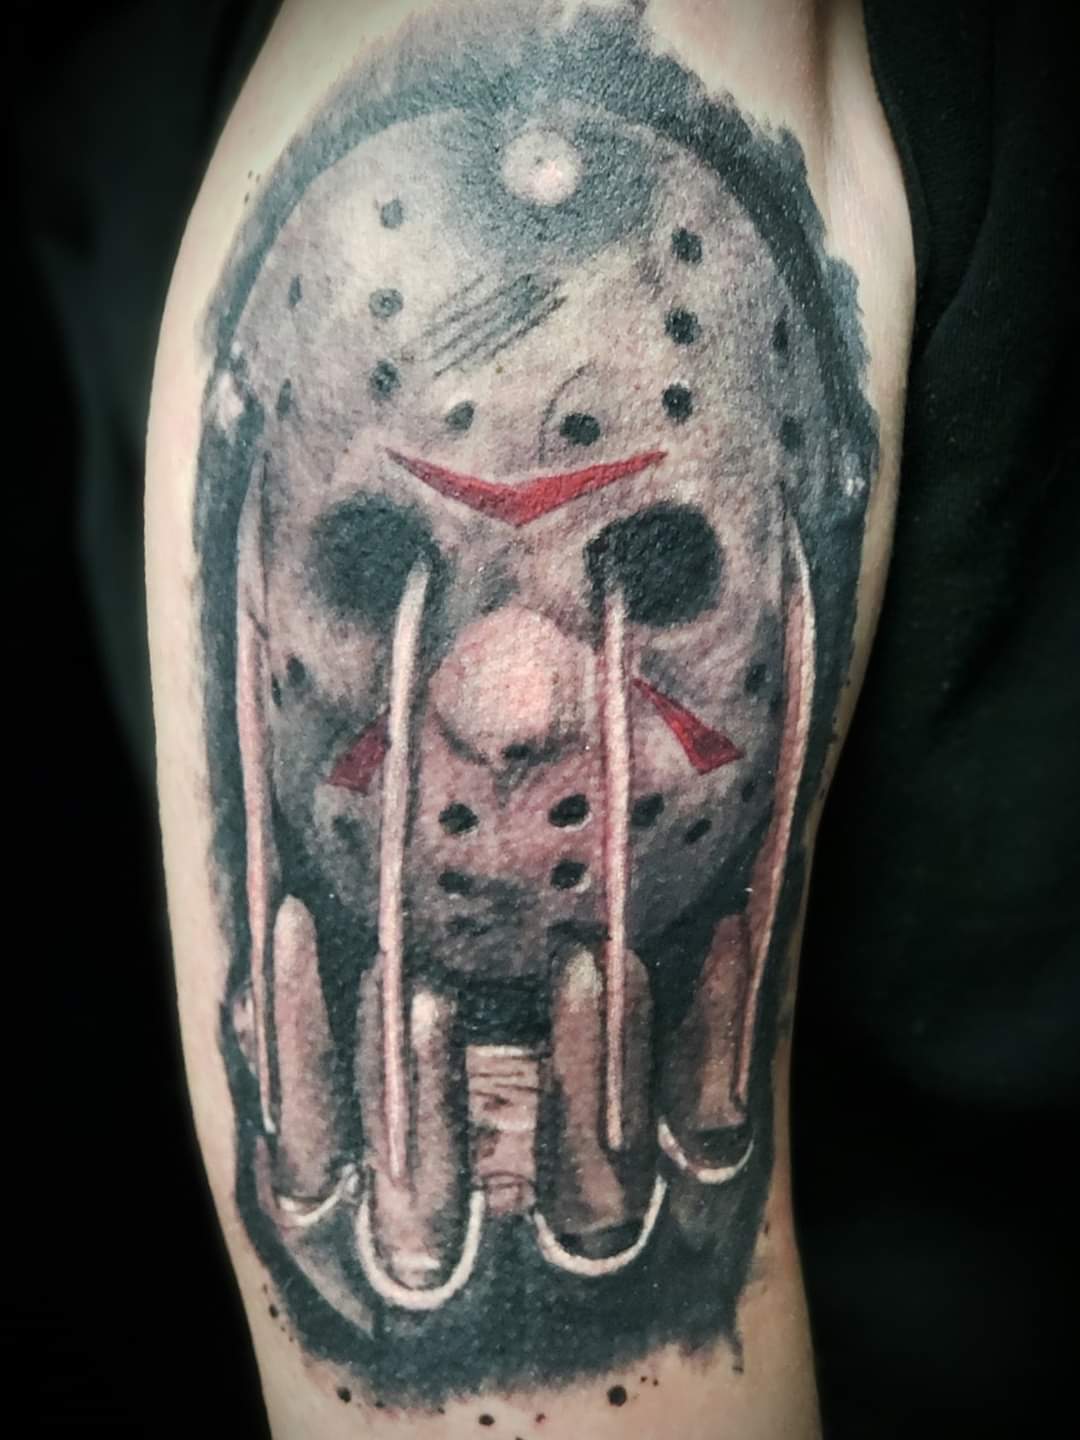 Tattoo of Freddy Movies Horror